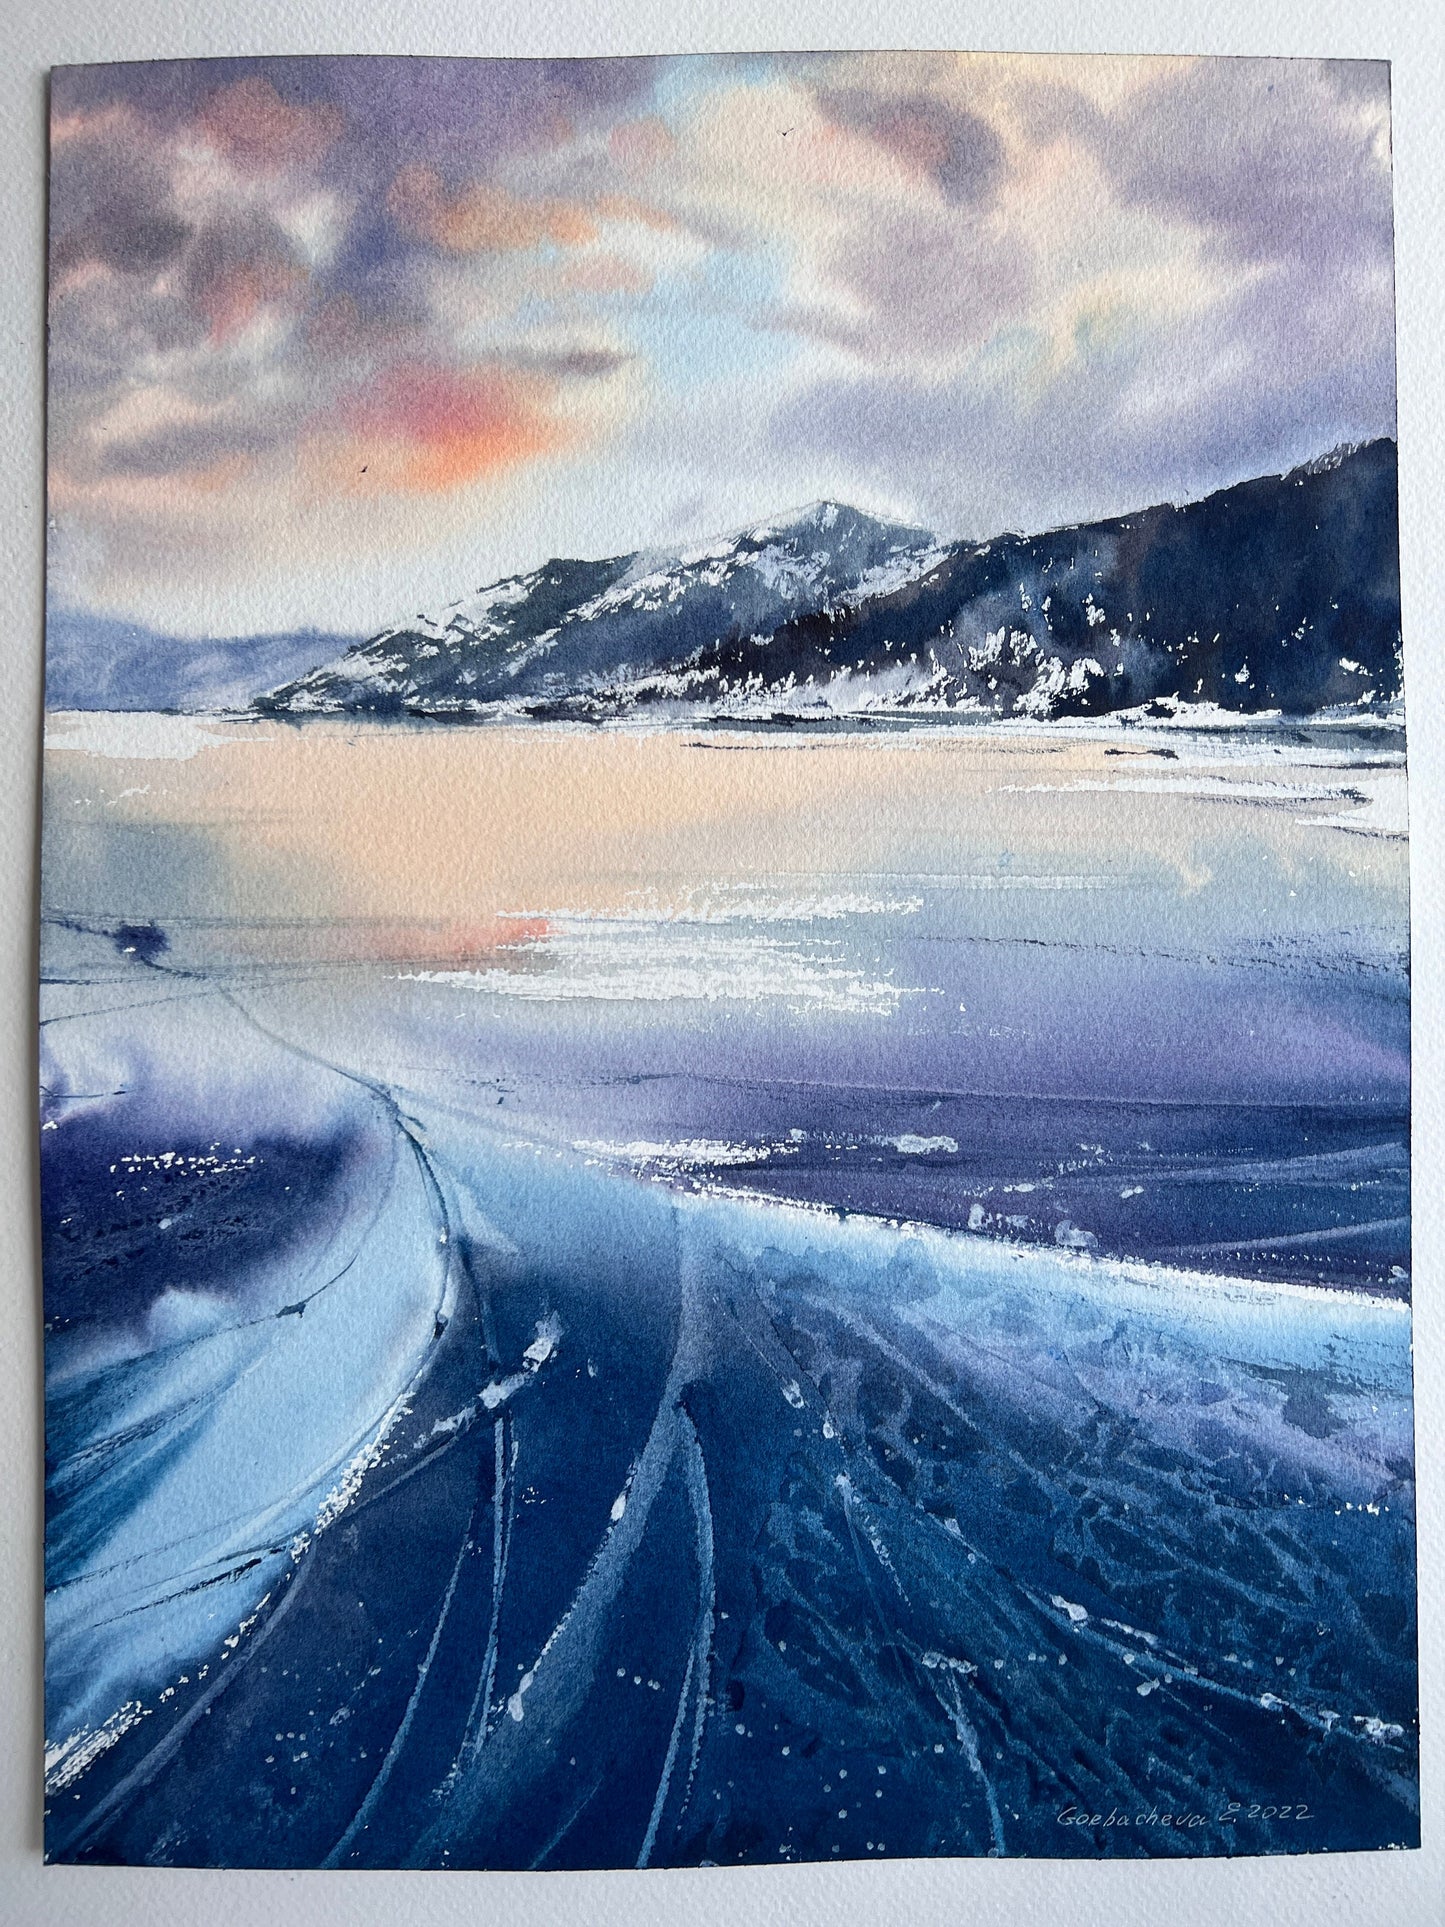 Baikal Lake Painting, Watercolor Original, Frozen Winter Landscape, Frosty Day, Blue Ice Art, Christmas Wall Decor, Gift